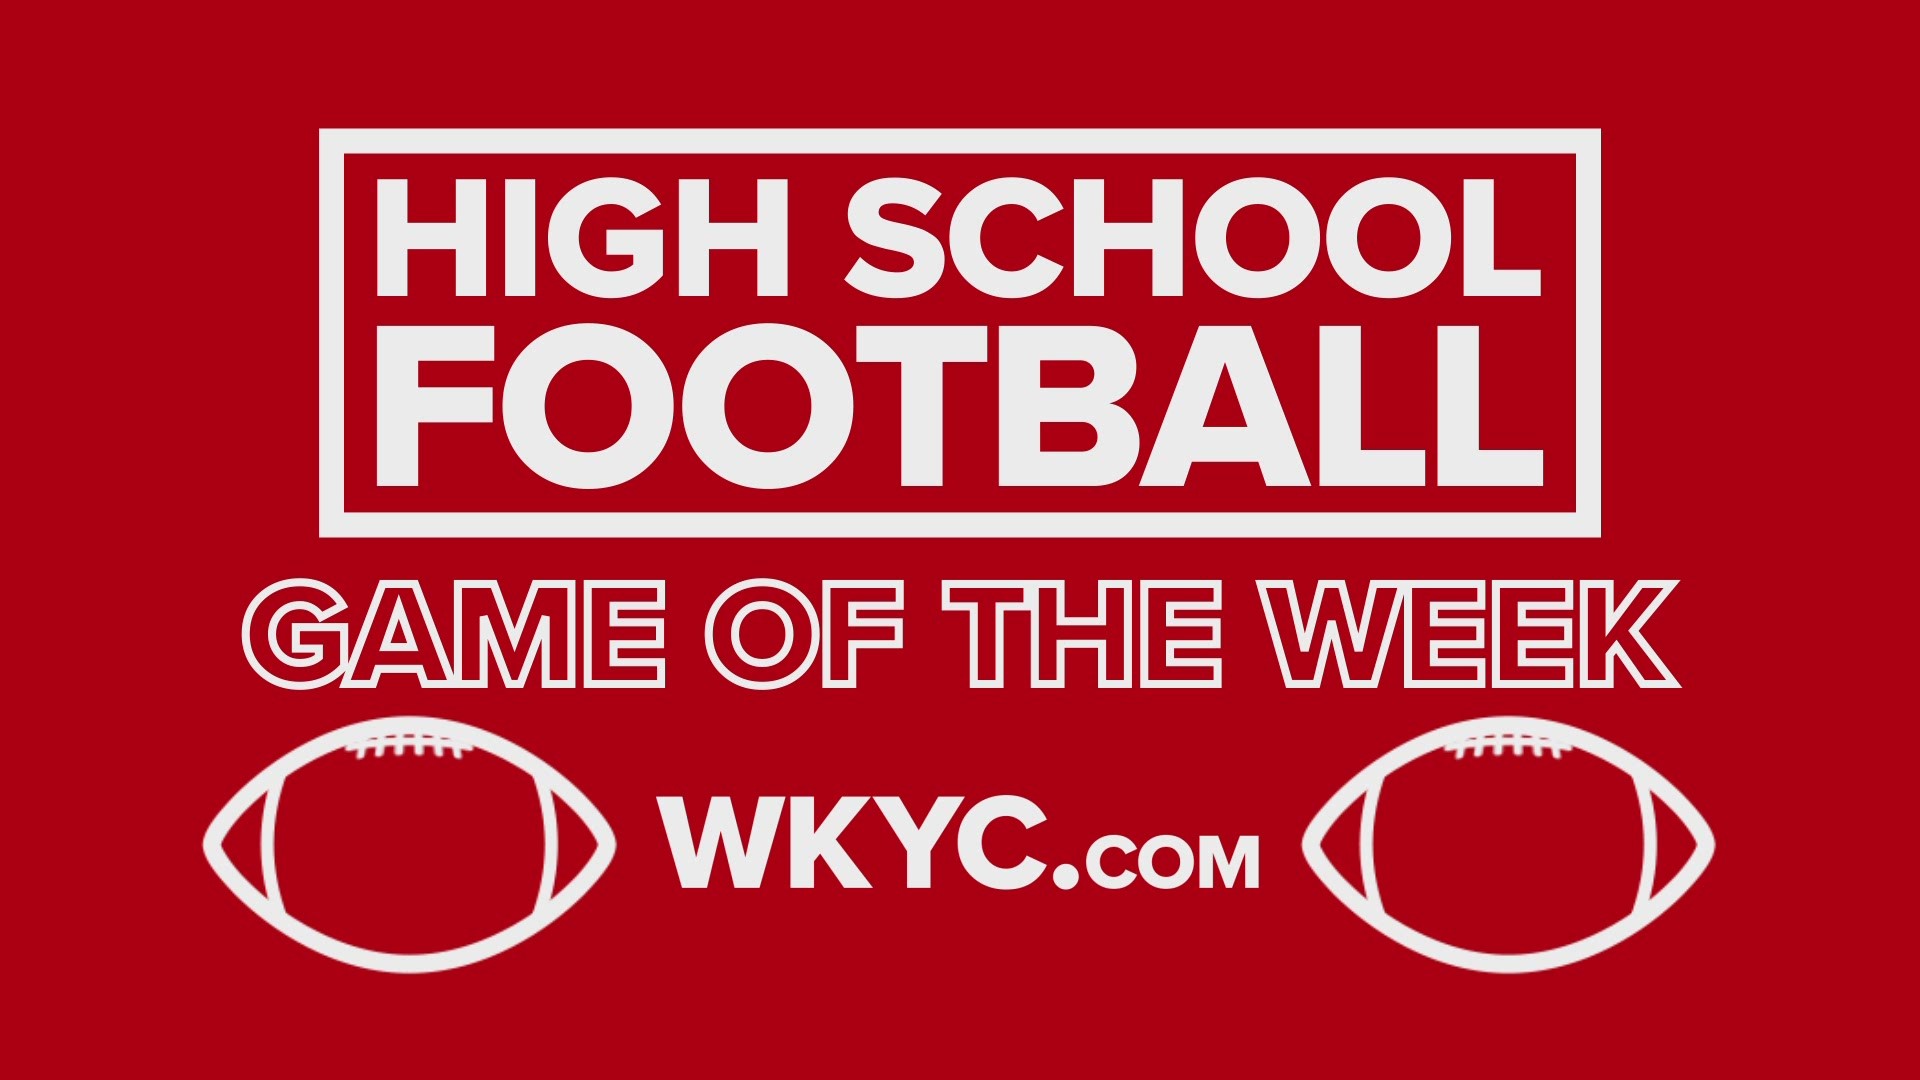 Highland beats Brunswick 28-7 in WKYC.com's inaugural High School Football Game of the Week